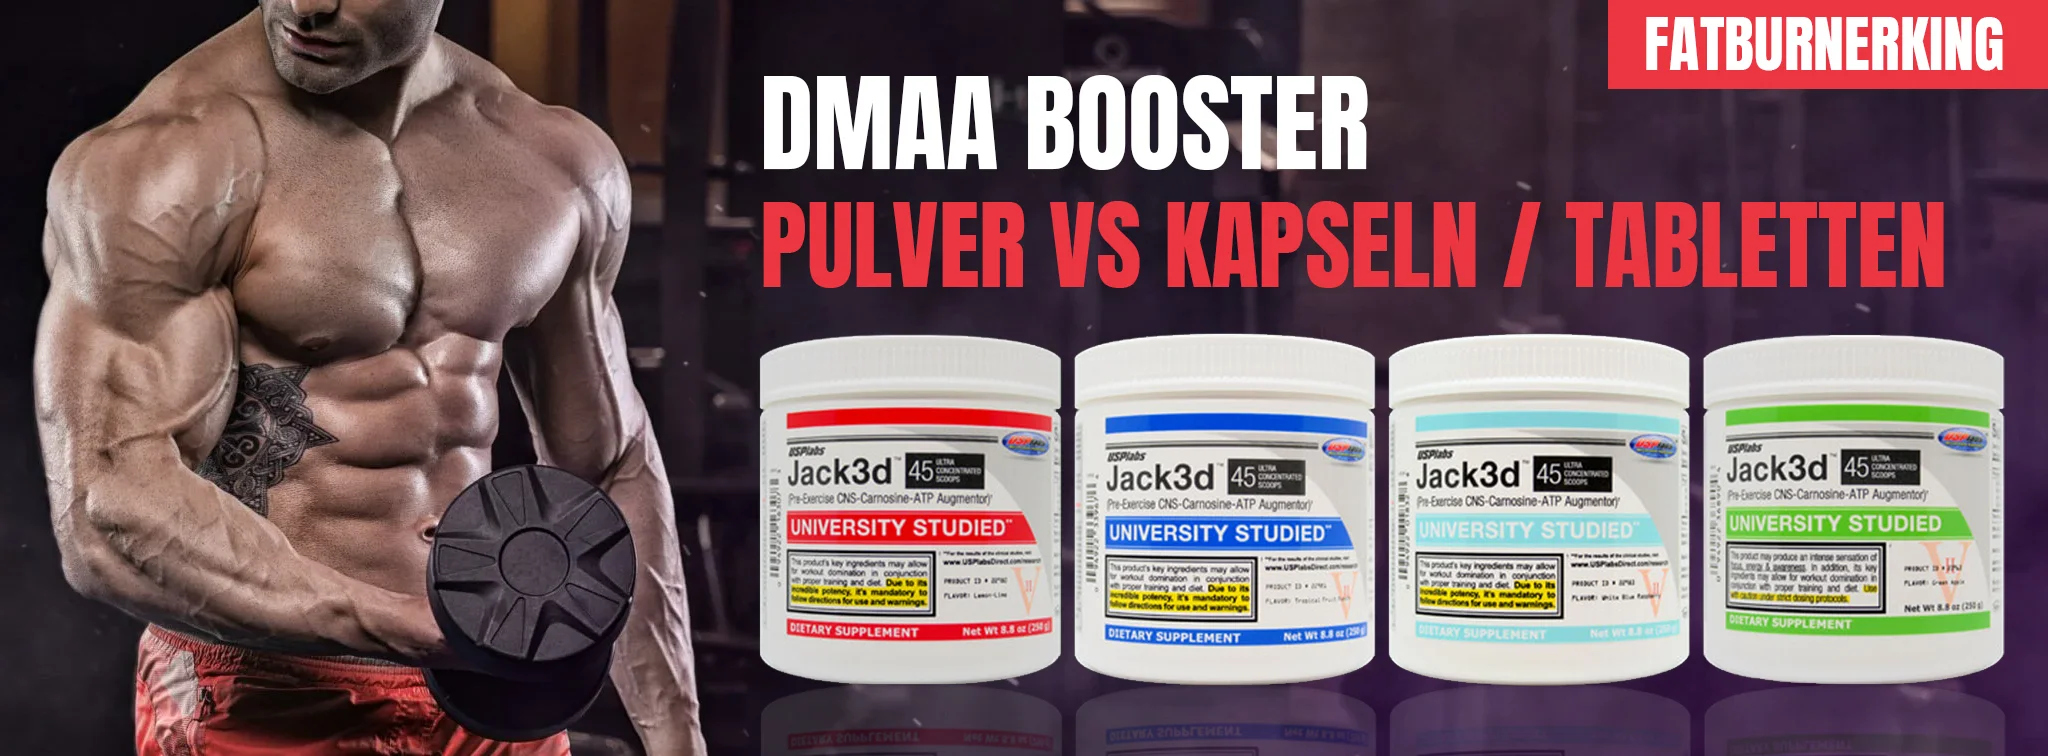 dmaa powder vs dmaa tablets / capsules